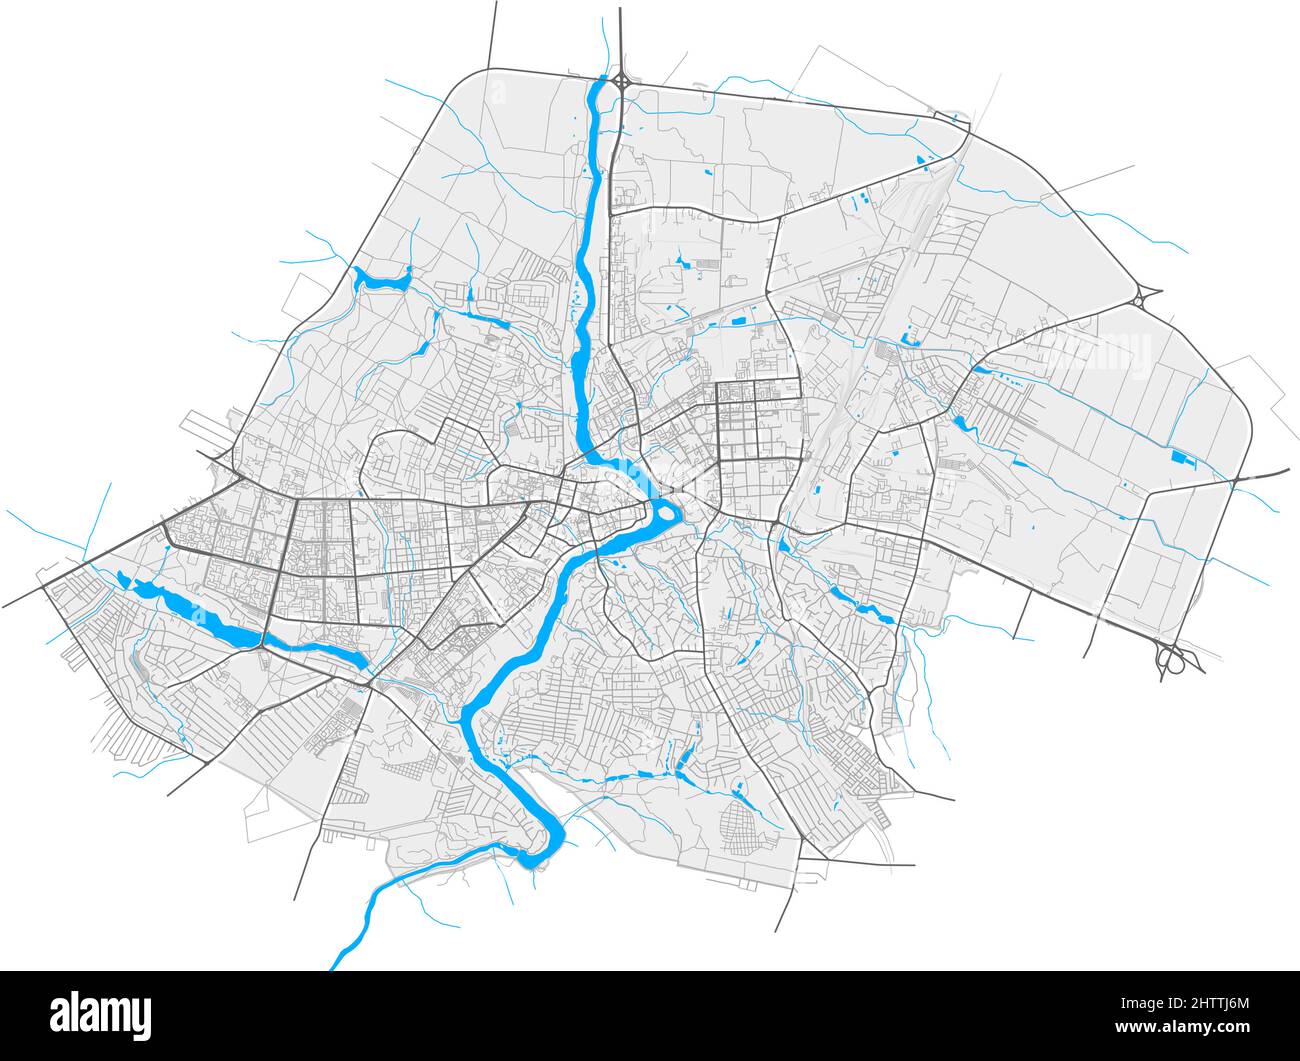 Vinnytsia, Vinnytsia Oblast, Ukraine high resolution vector map with city boundaries and outlined paths. White additional outlines for main roads. Man Stock Vector